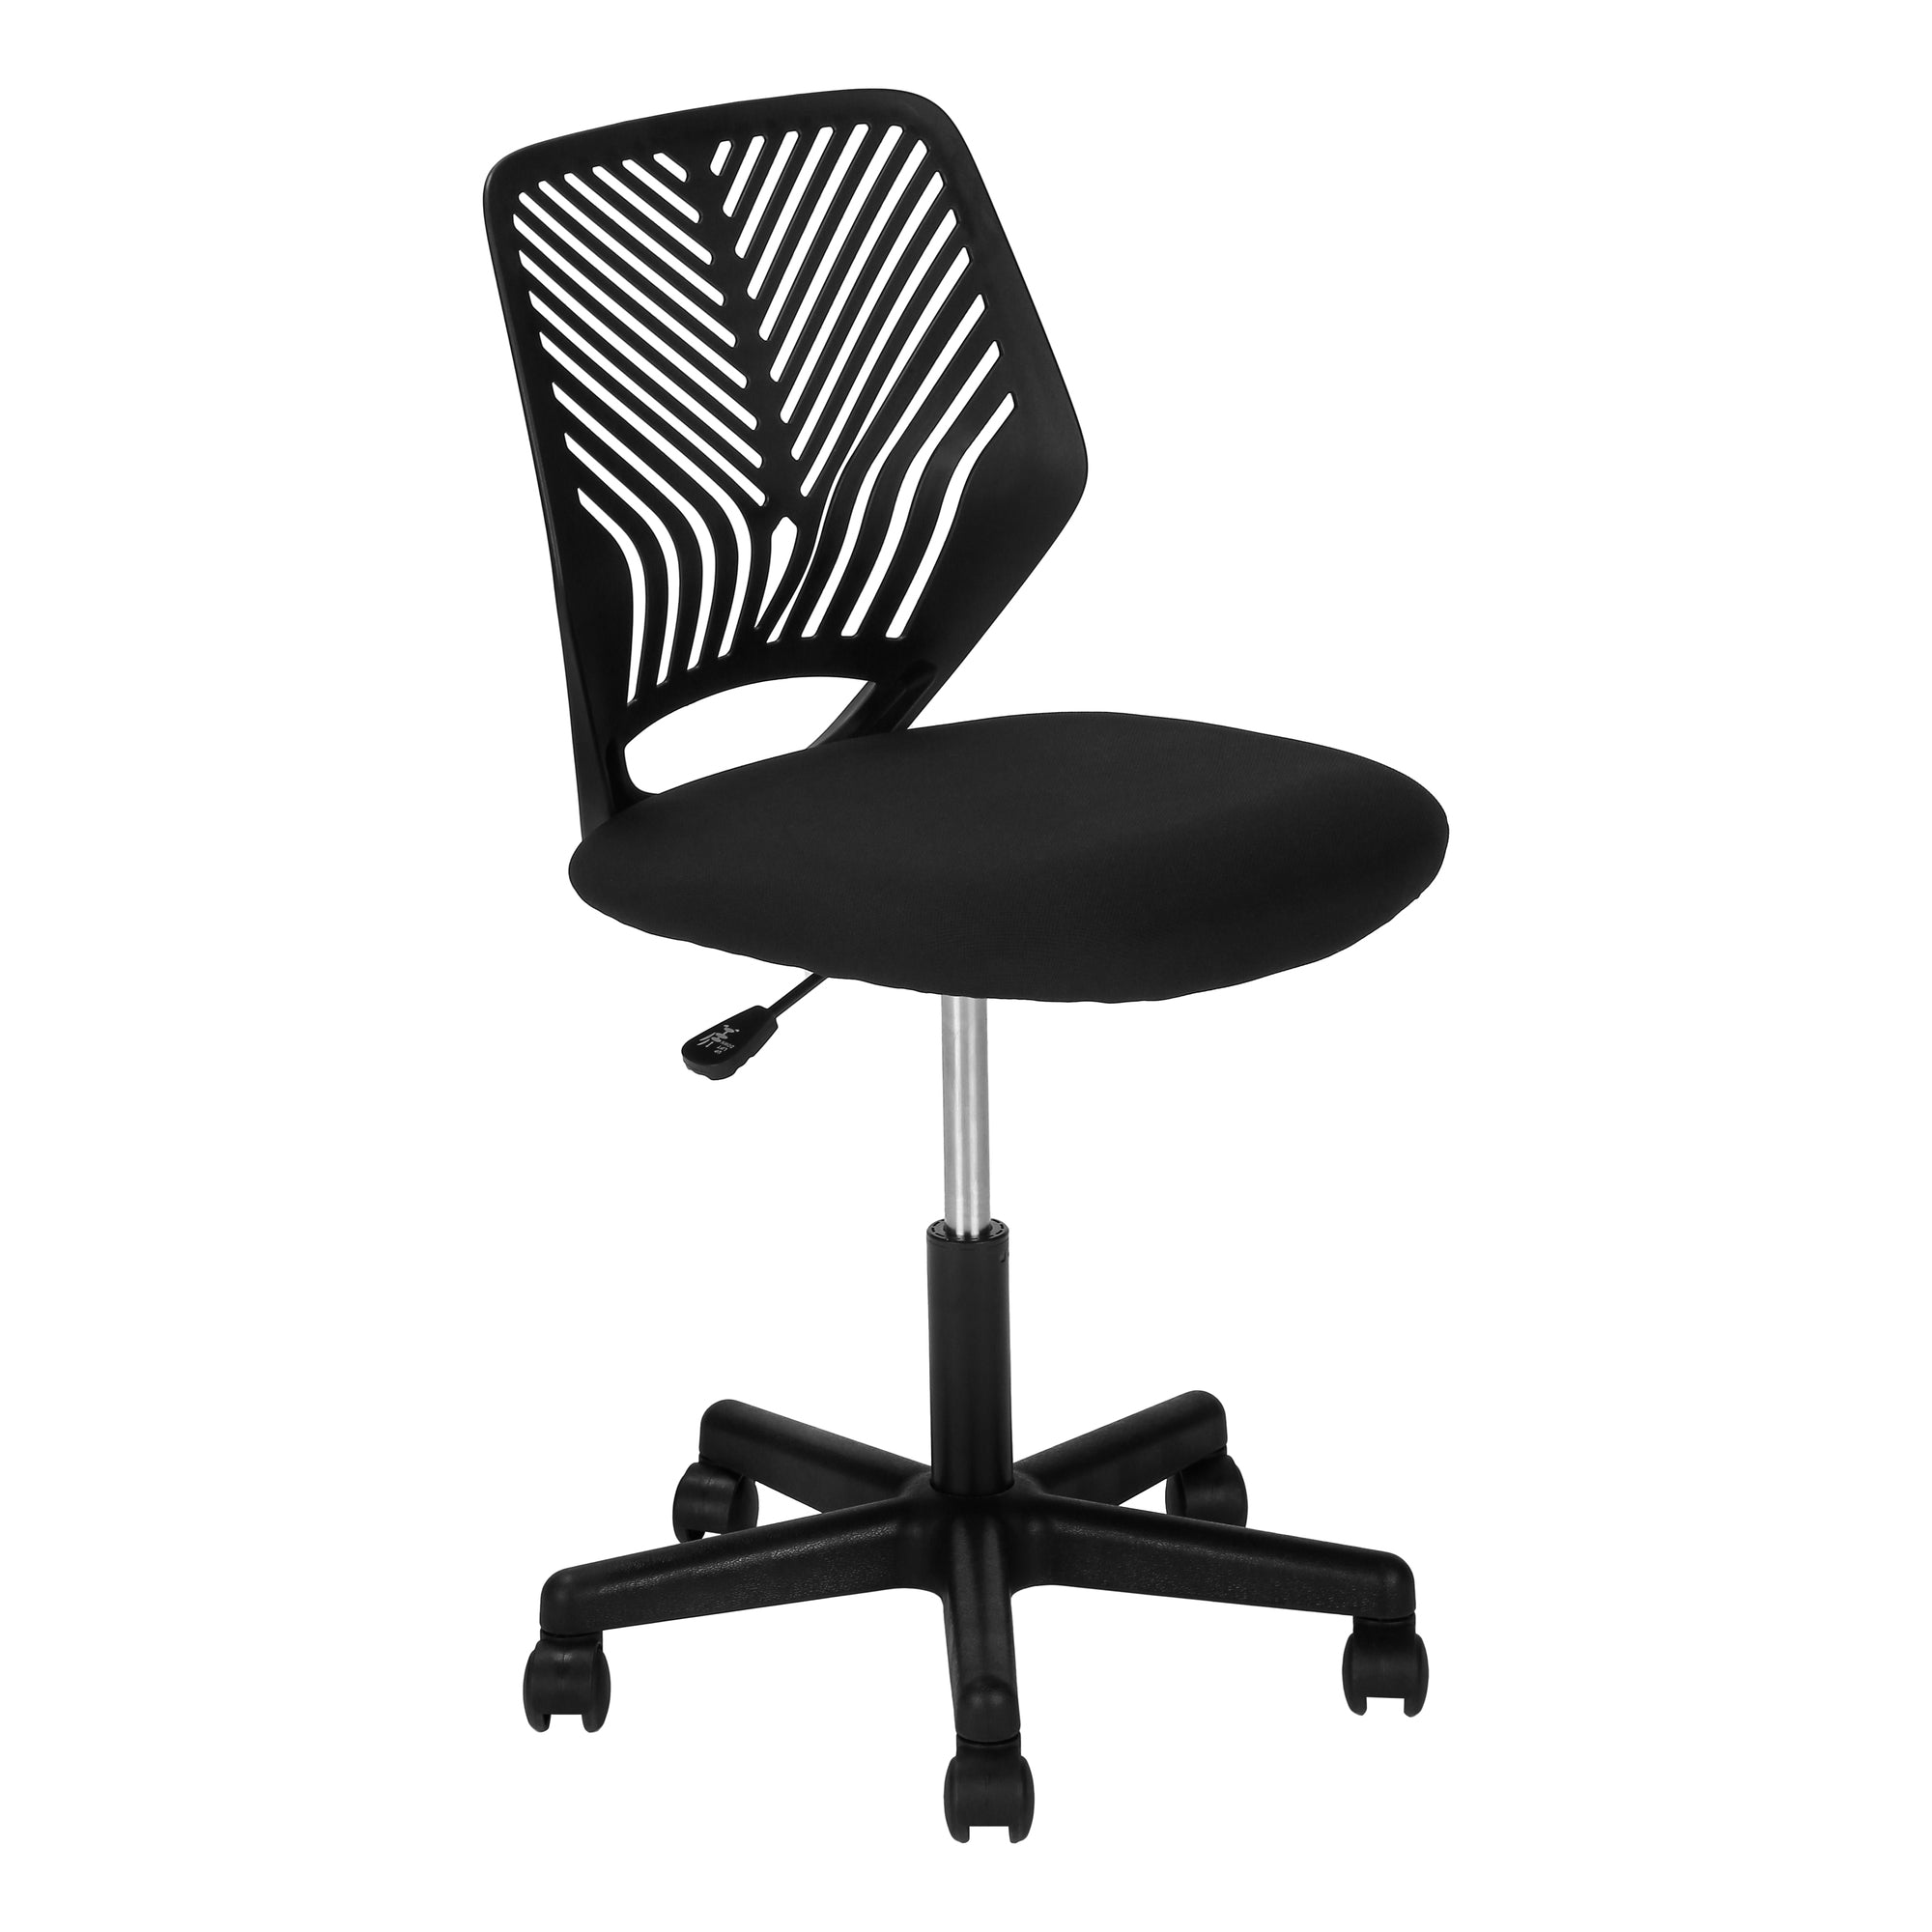 MN-327336    Office Chair, Adjustable Height, Swivel, Ergonomic, Computer Desk, Office, Metal, Laminate, Black, Contemporary, Modern